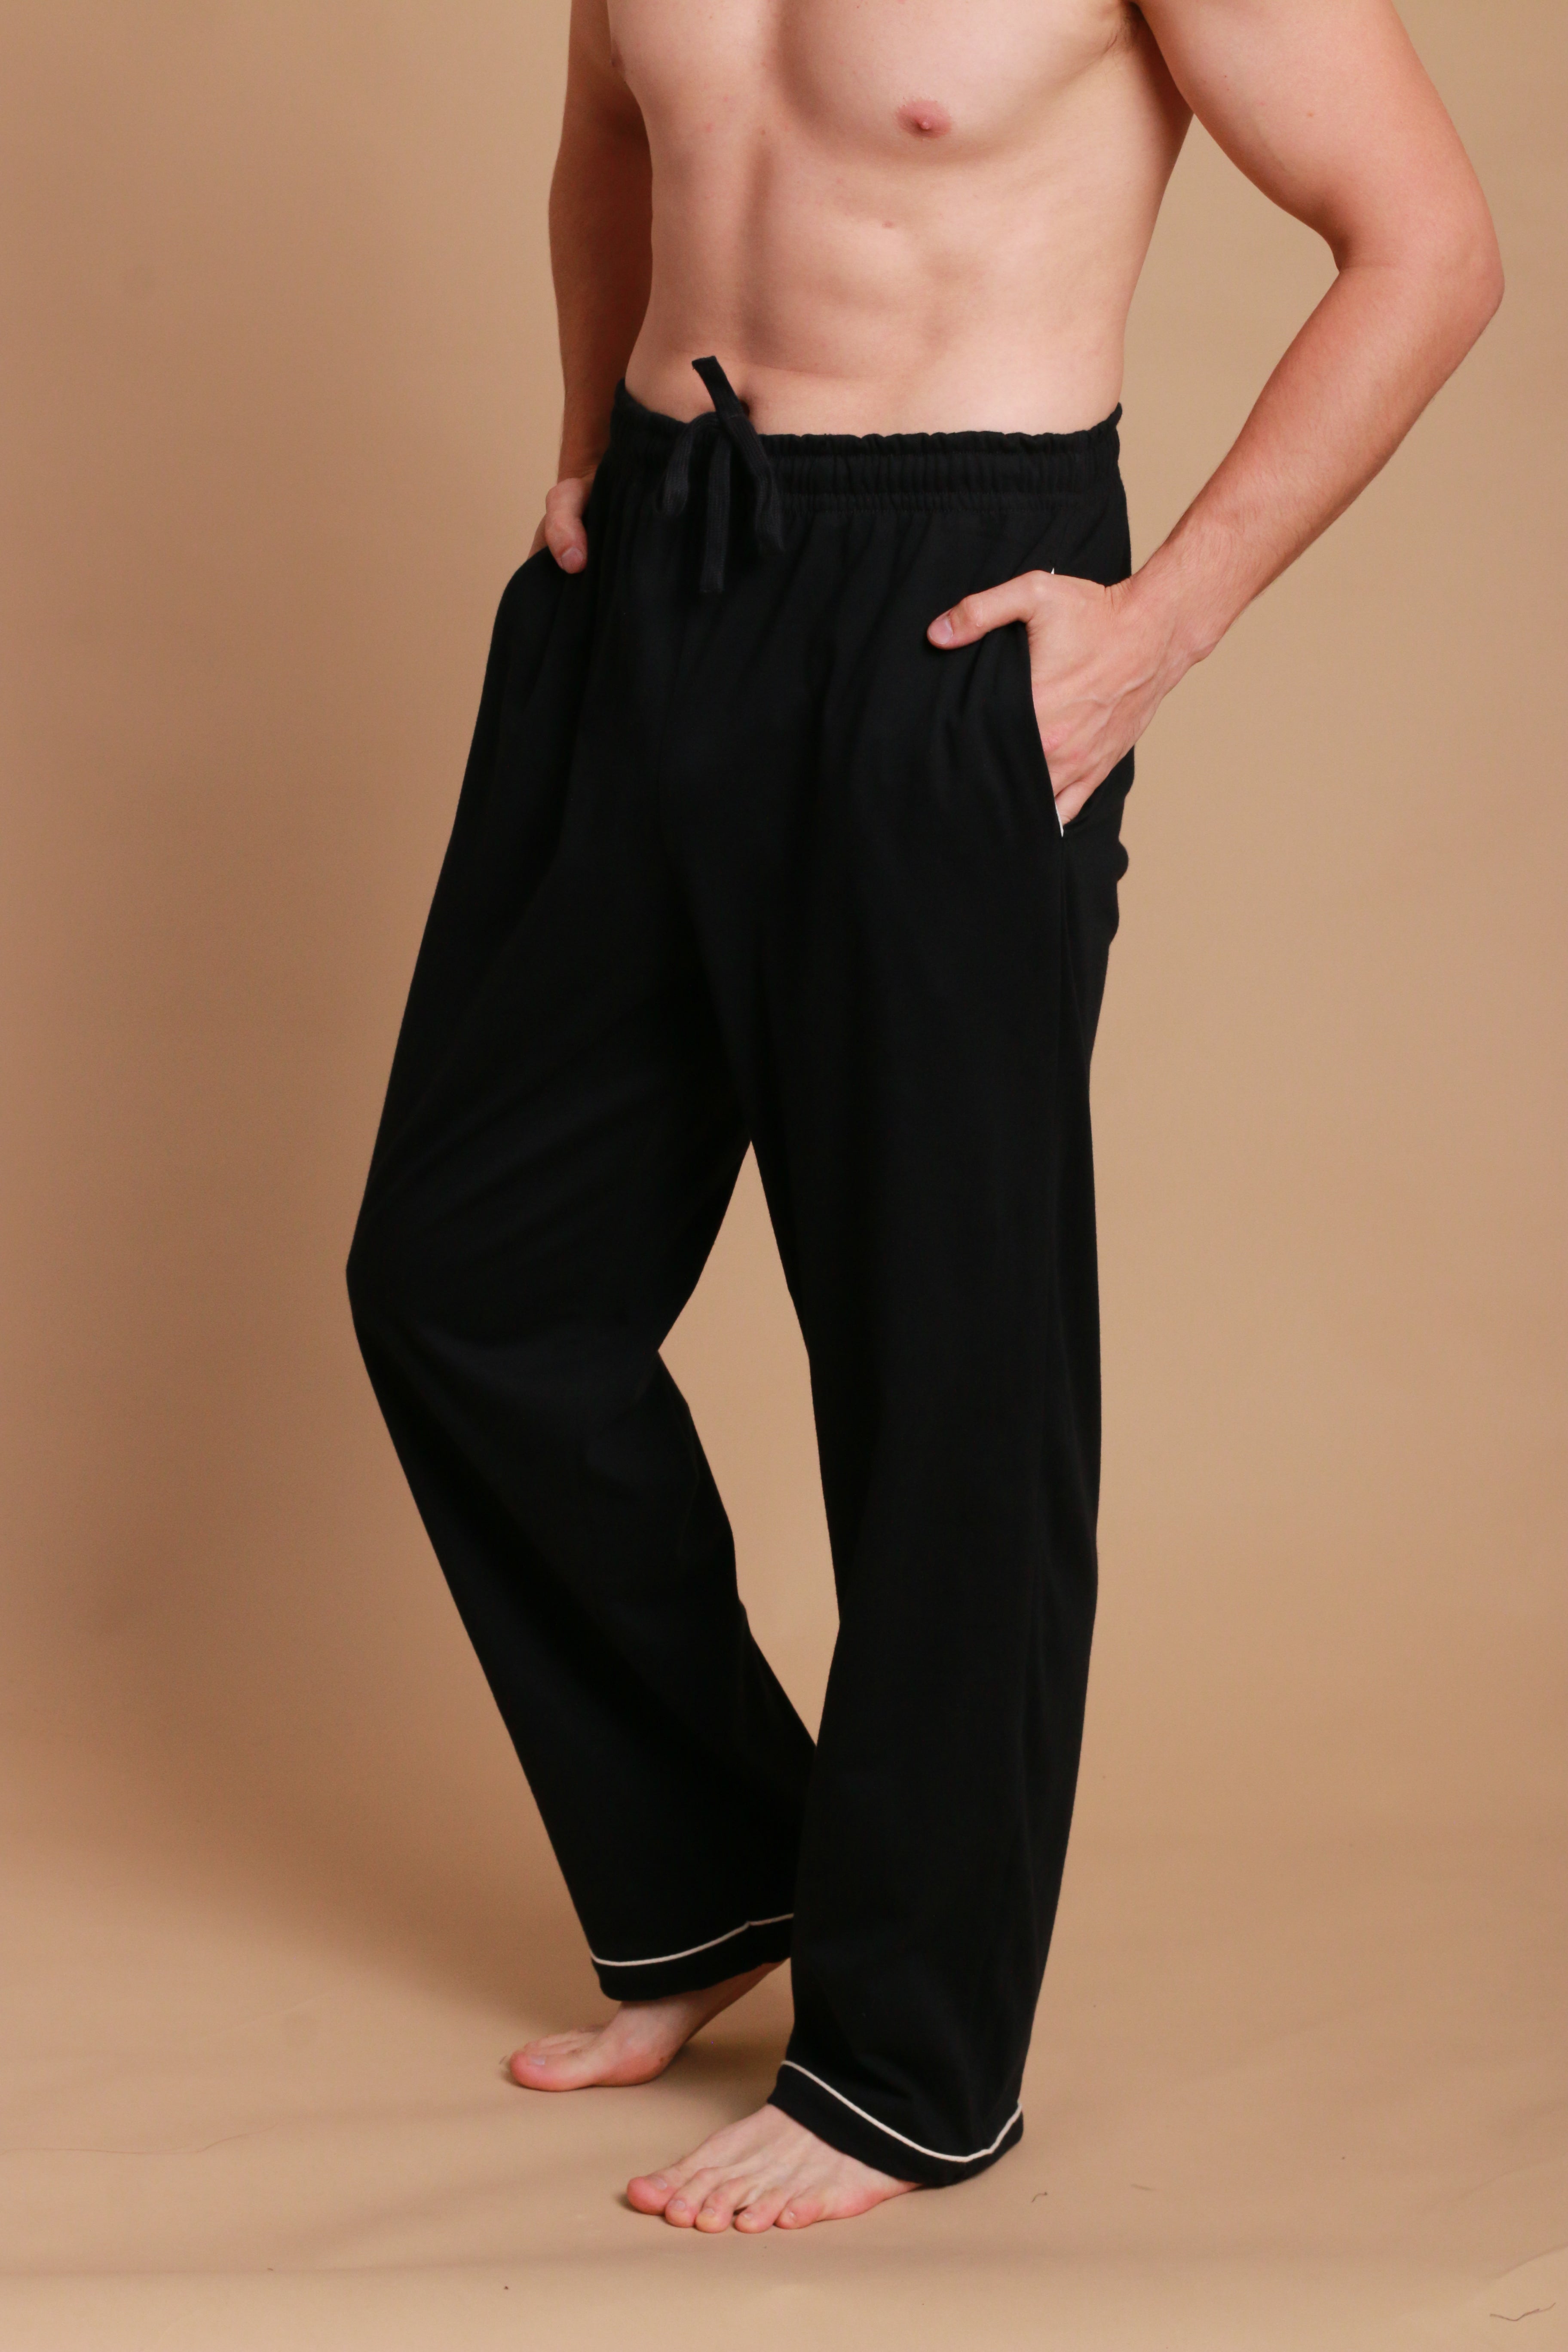 YINCOZI Men's 100% Cotton Super Soft Flannel Pajama Pants, Black